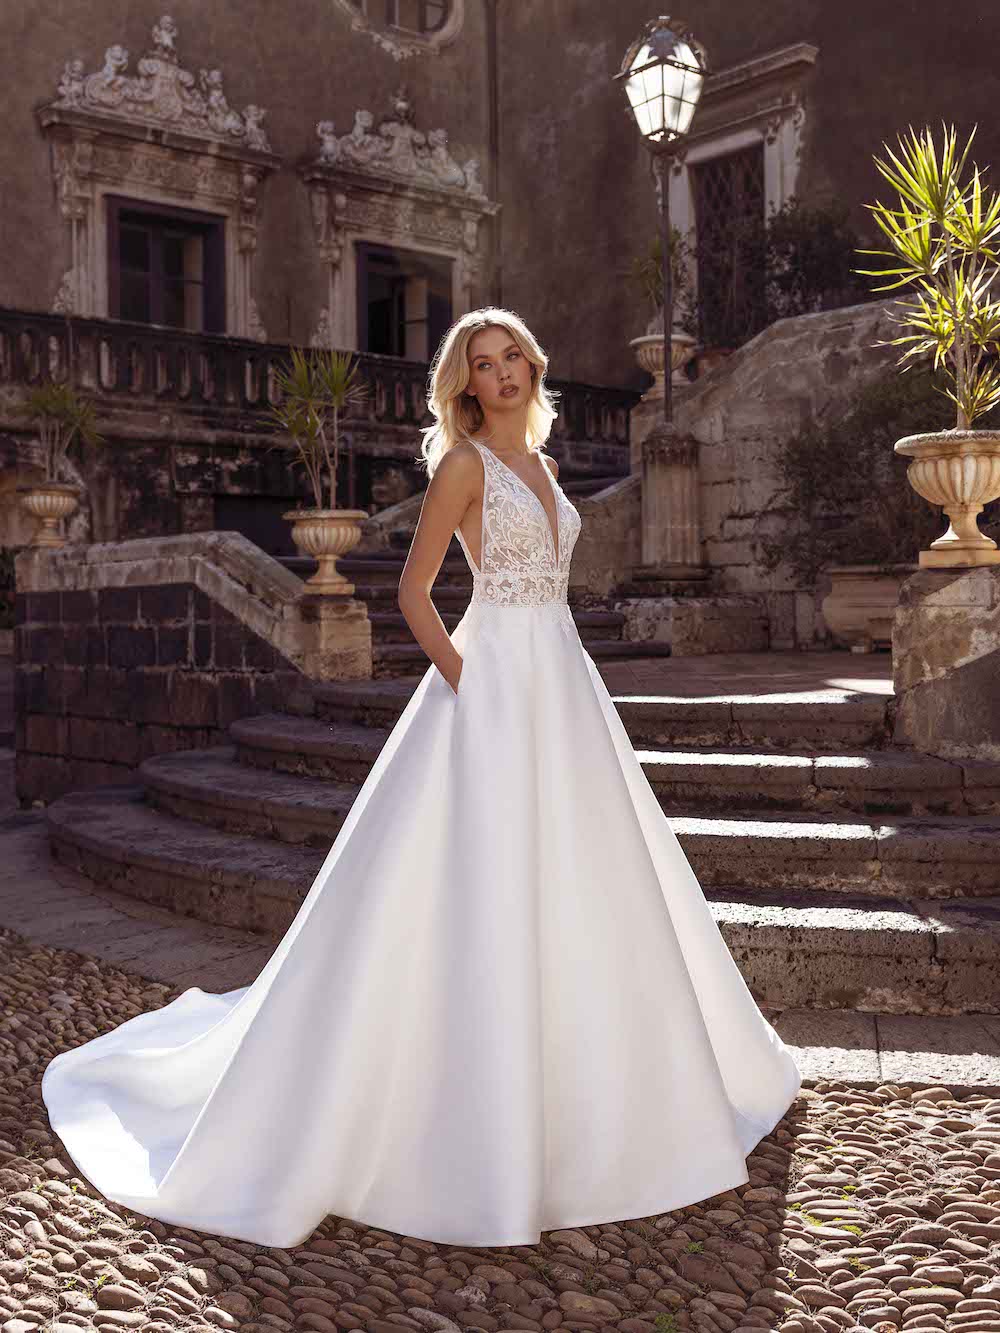 Geduld Makkelijk te lezen Diakritisch Roux - Modeca trouwjurk - Covers Bridal Couture - De mooiste collectie  trouwjurken